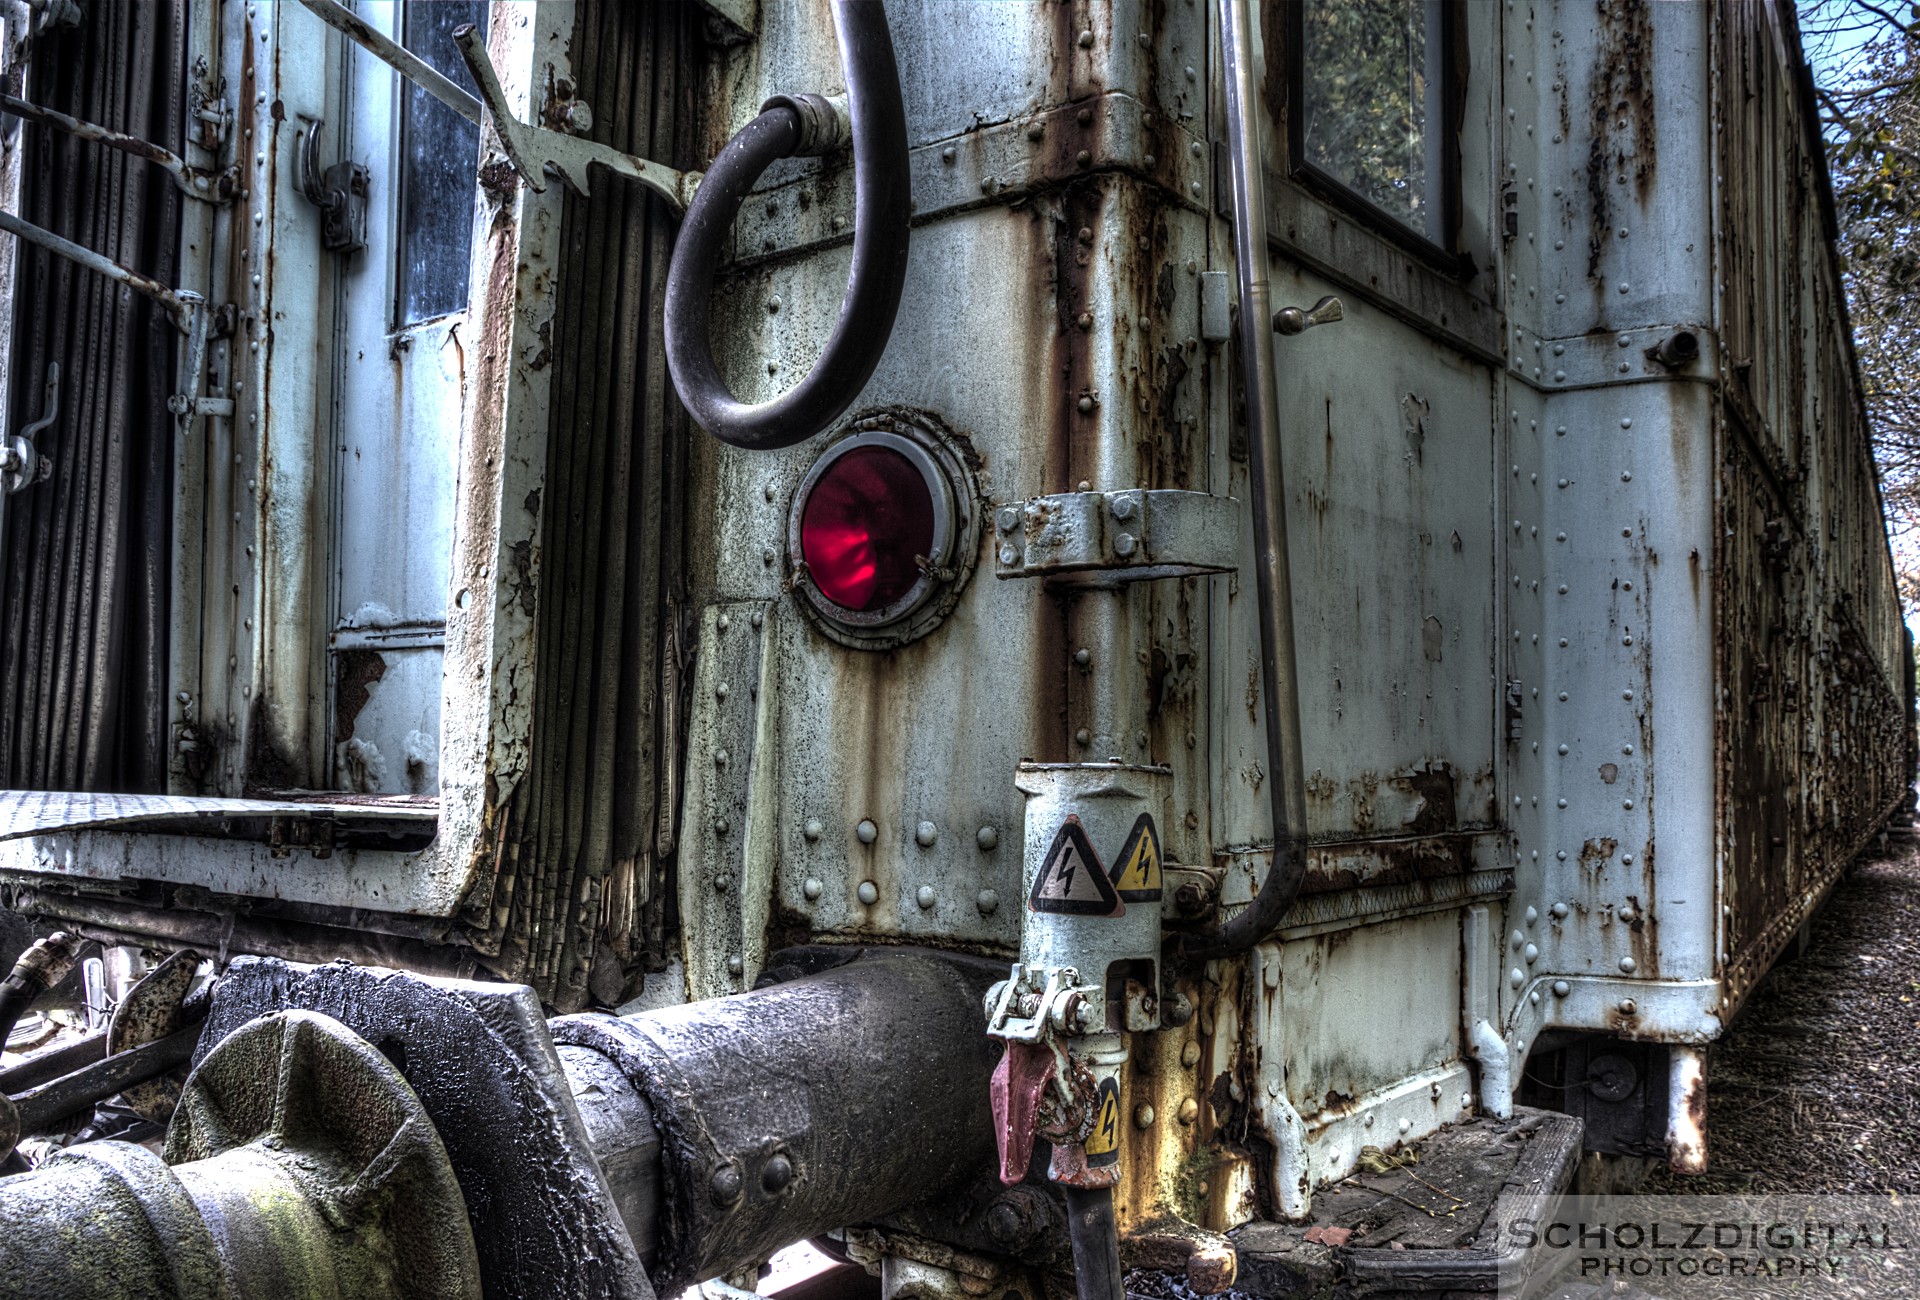 Verlassene Waggons - Abandoned Trains